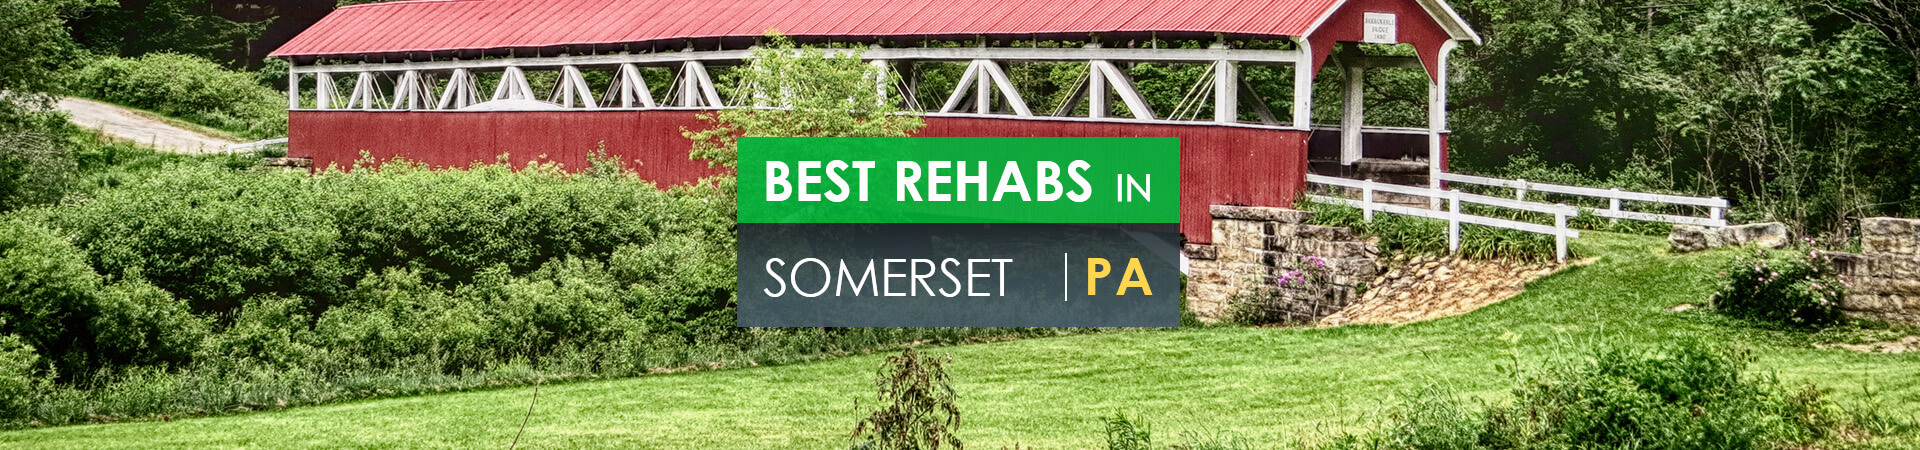 Best rehabs in Somerset, PA